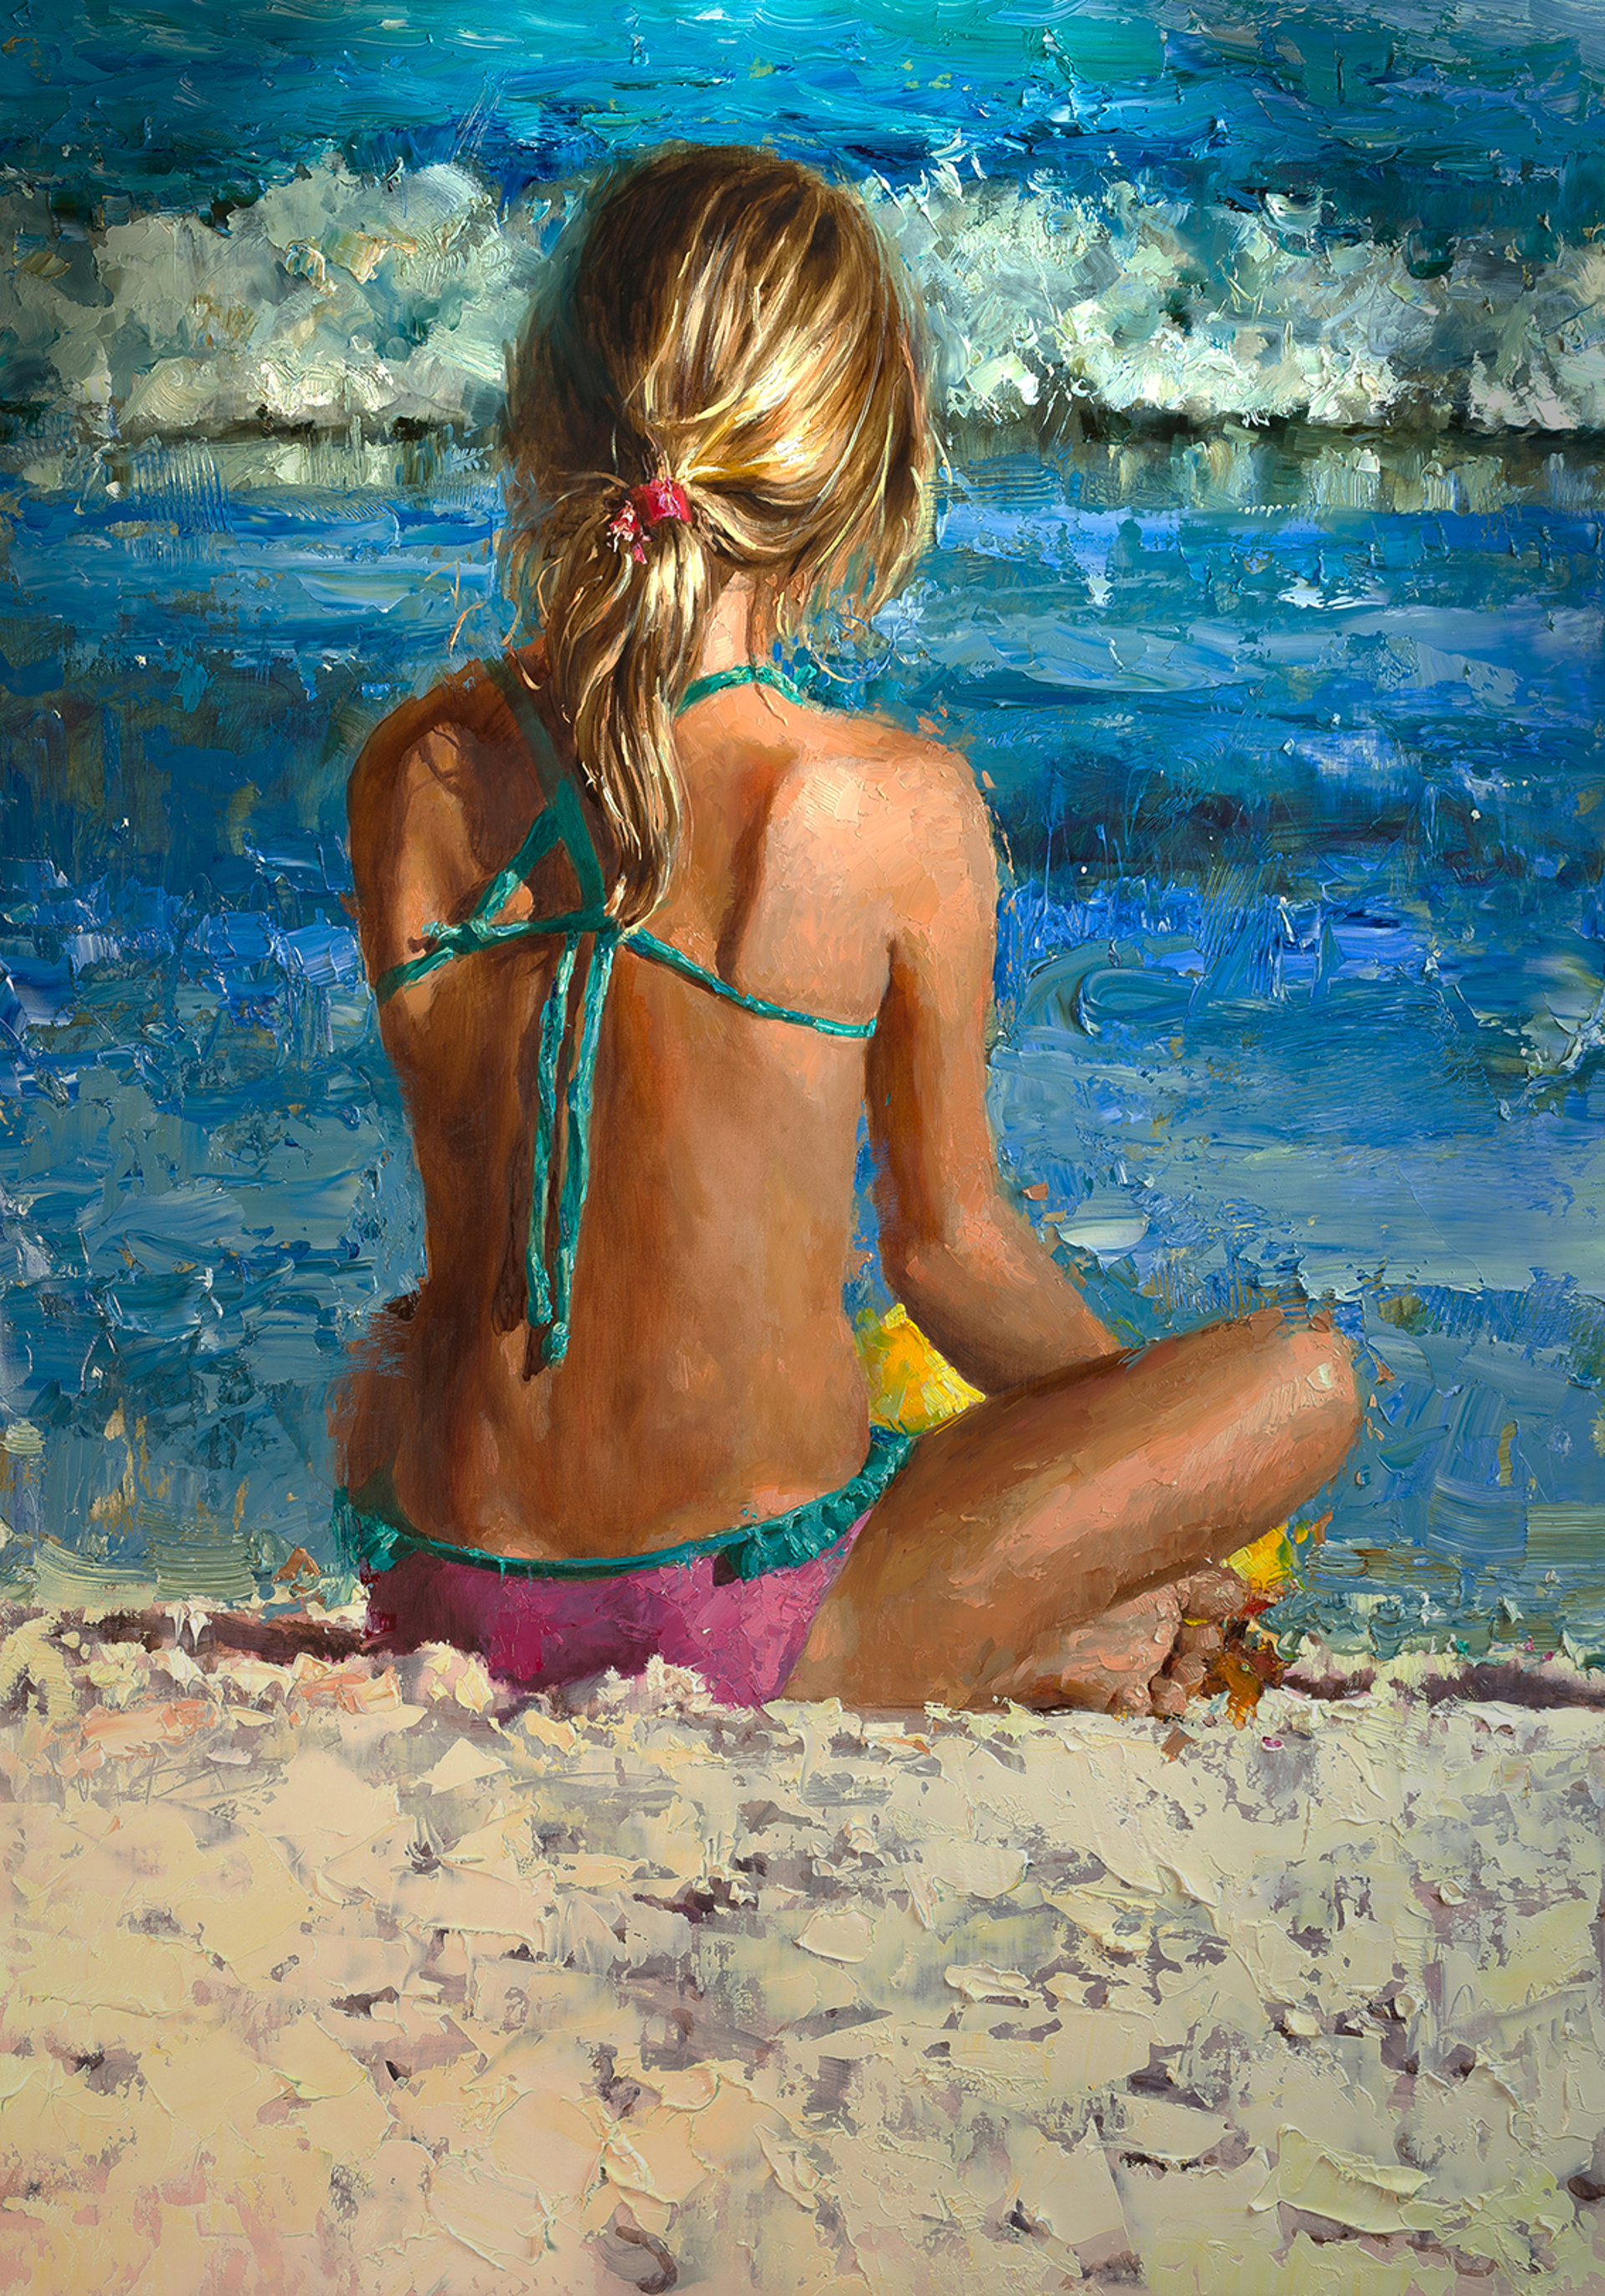 "On The Beach" by Oleg Trofimov